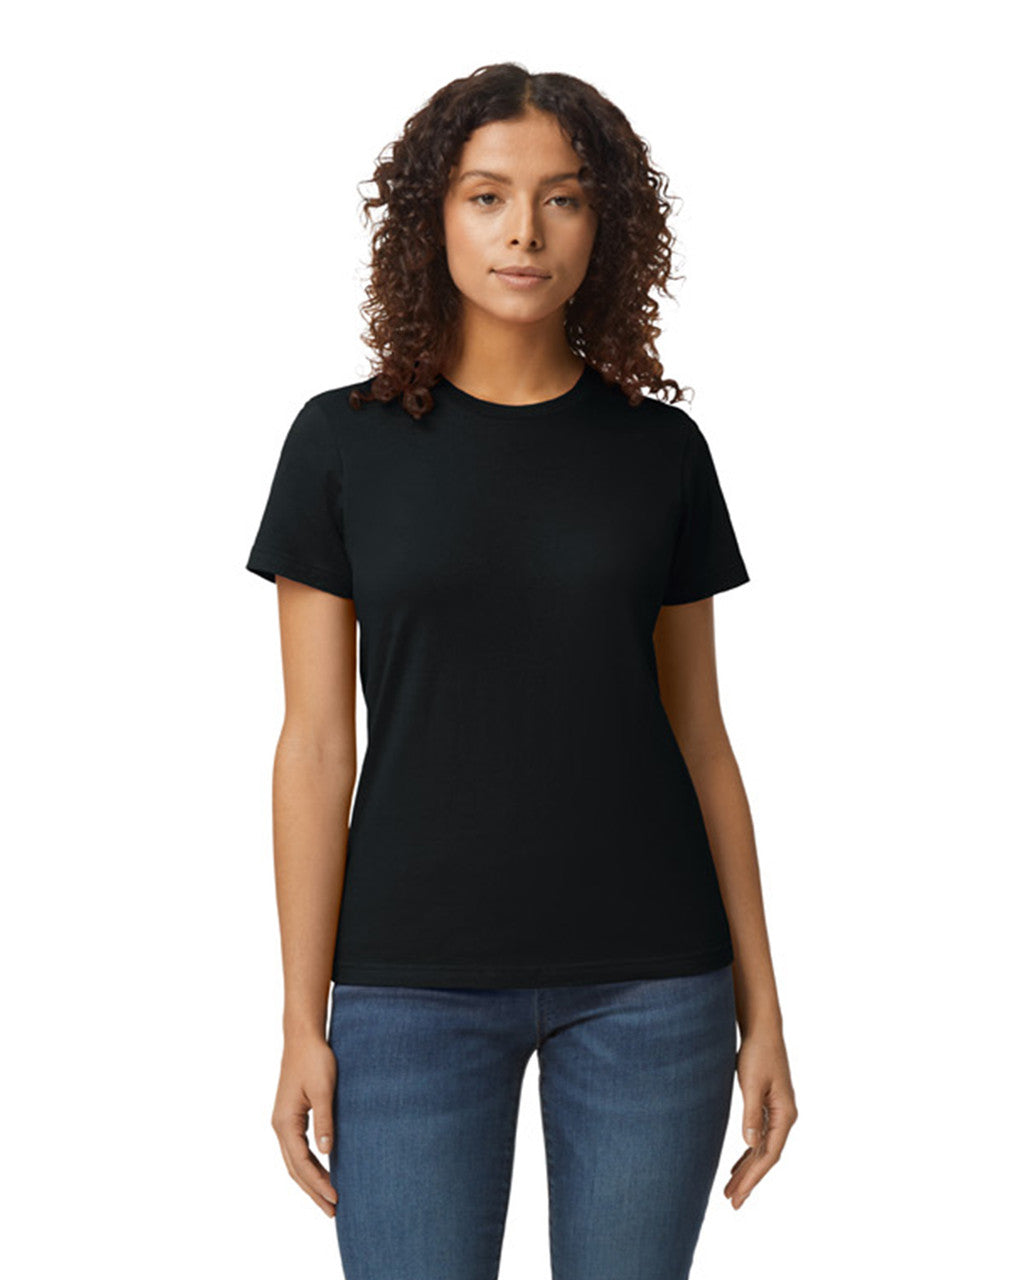 Gildan Soft Style Adults Ladies T-shirt 65000L